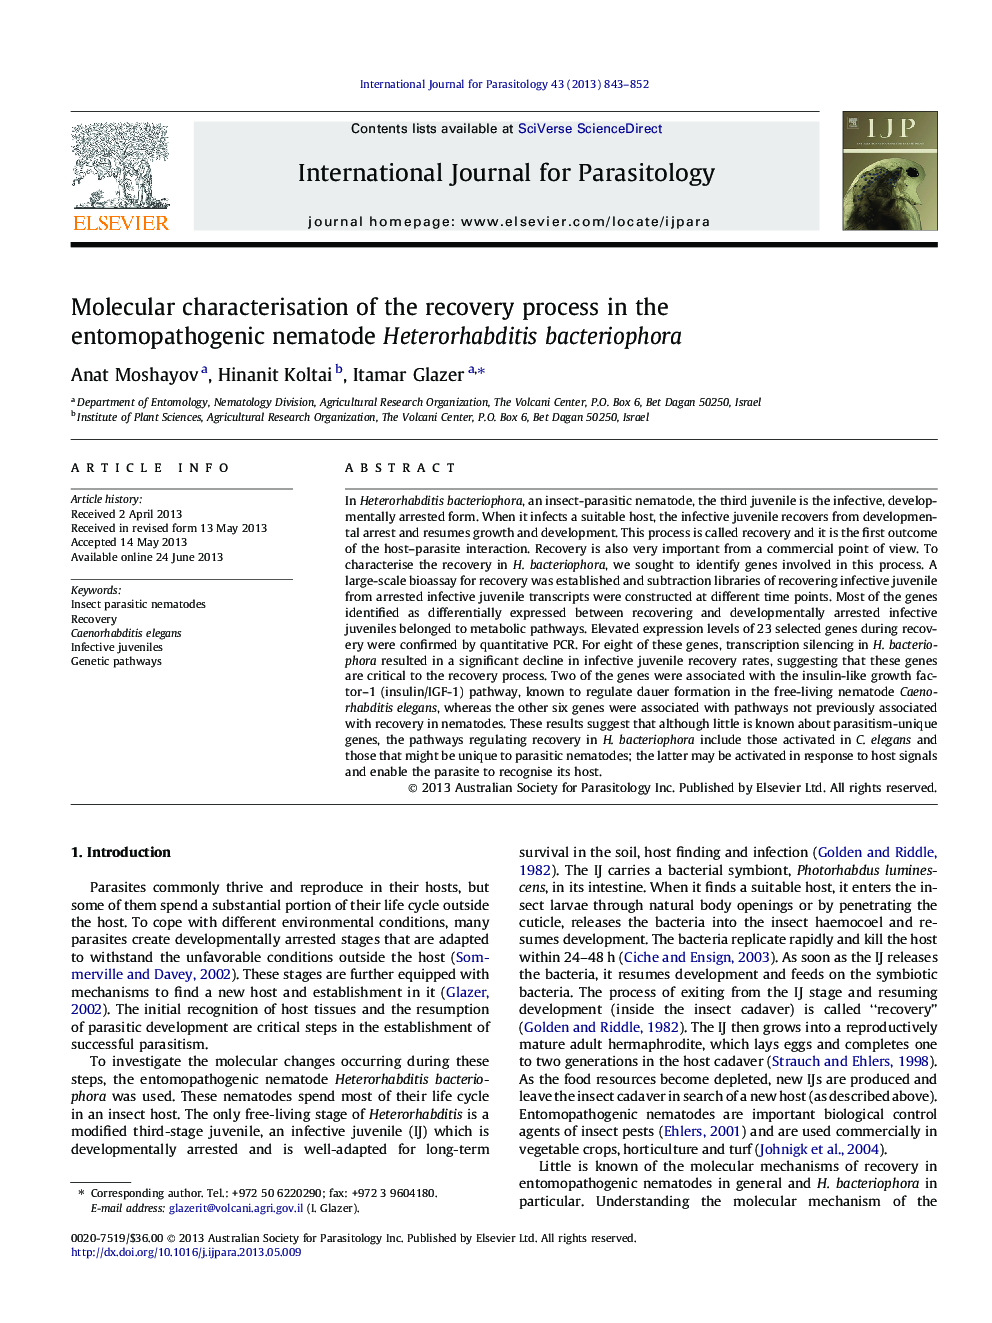 Molecular characterisation of the recovery process in the entomopathogenic nematode Heterorhabditis bacteriophora